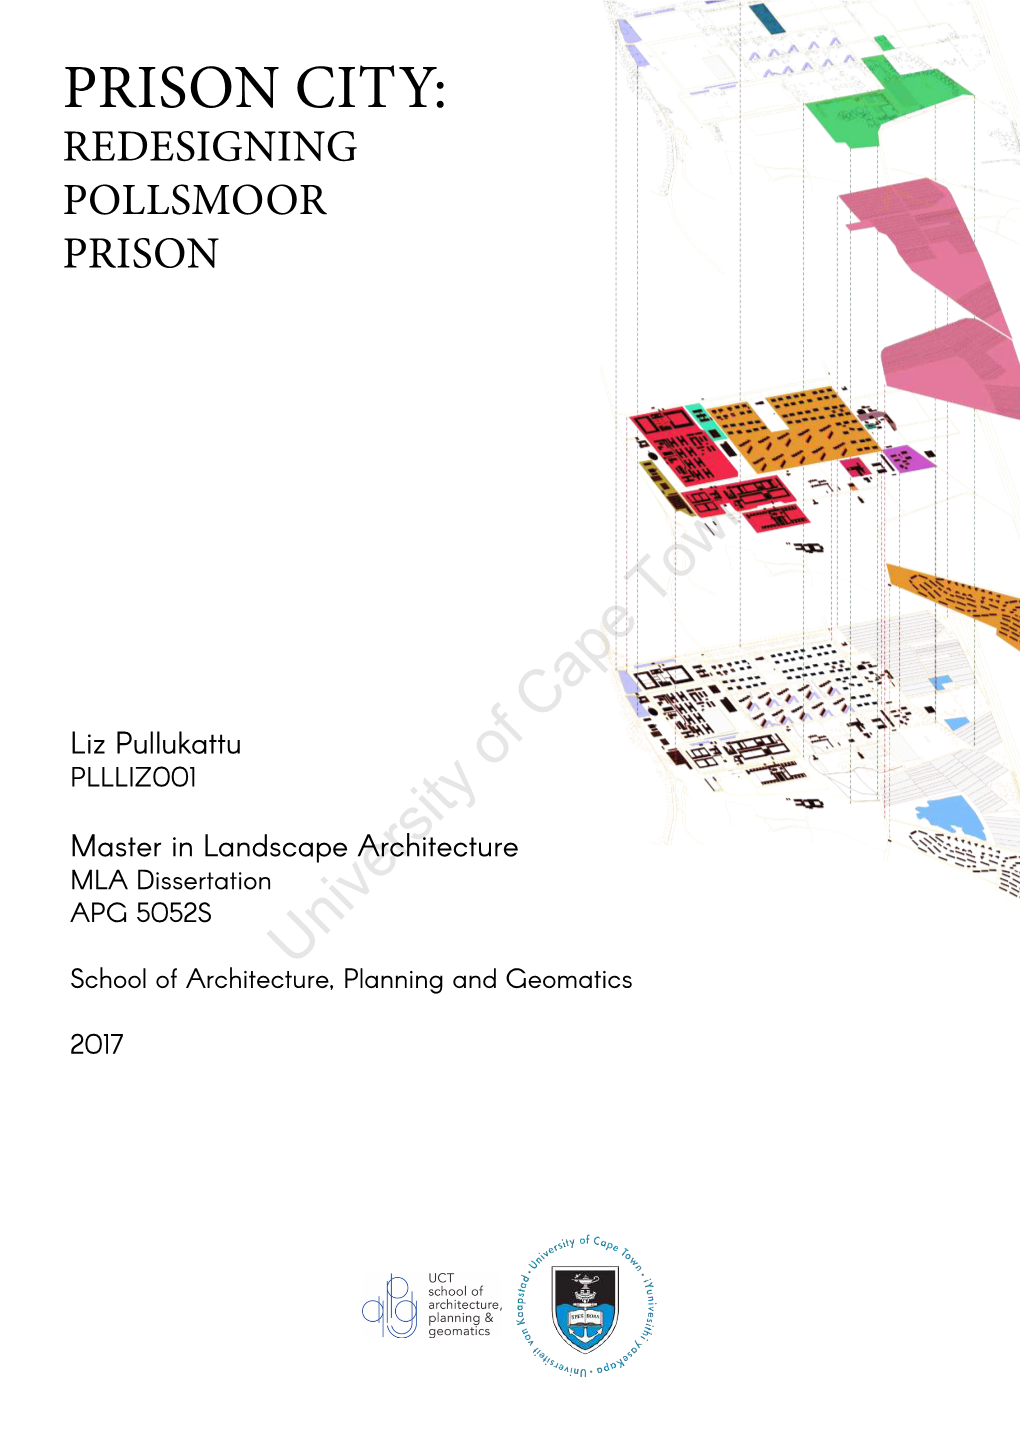 Prison City: Redesigning Pollsmoor Prison